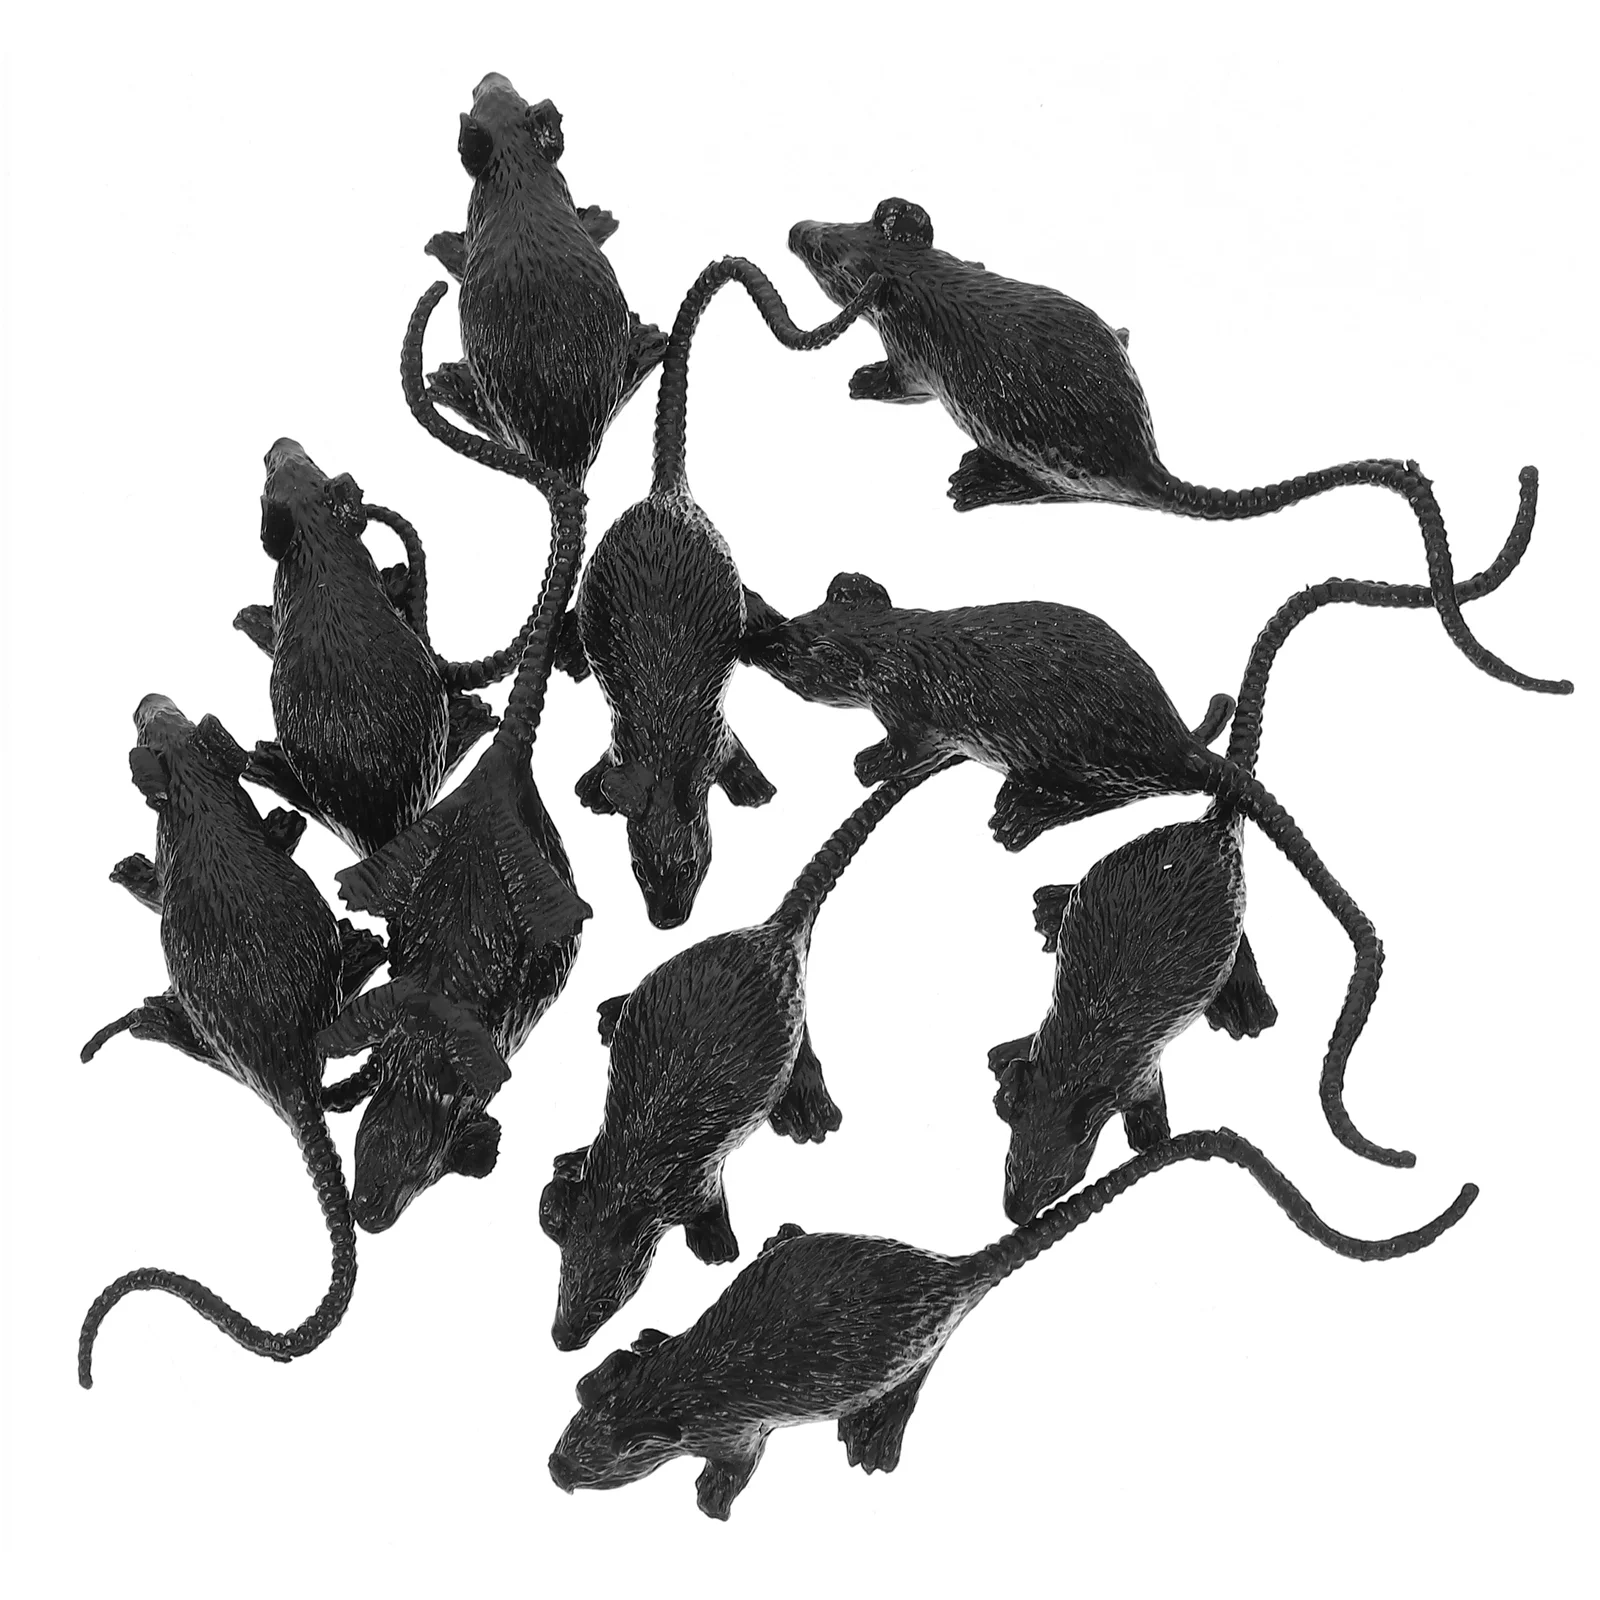 

10pcs Realistic Mice Rat Rat Lifelike Mouse Mice Rats Trick Toys for Joke Party Decoration Halloween